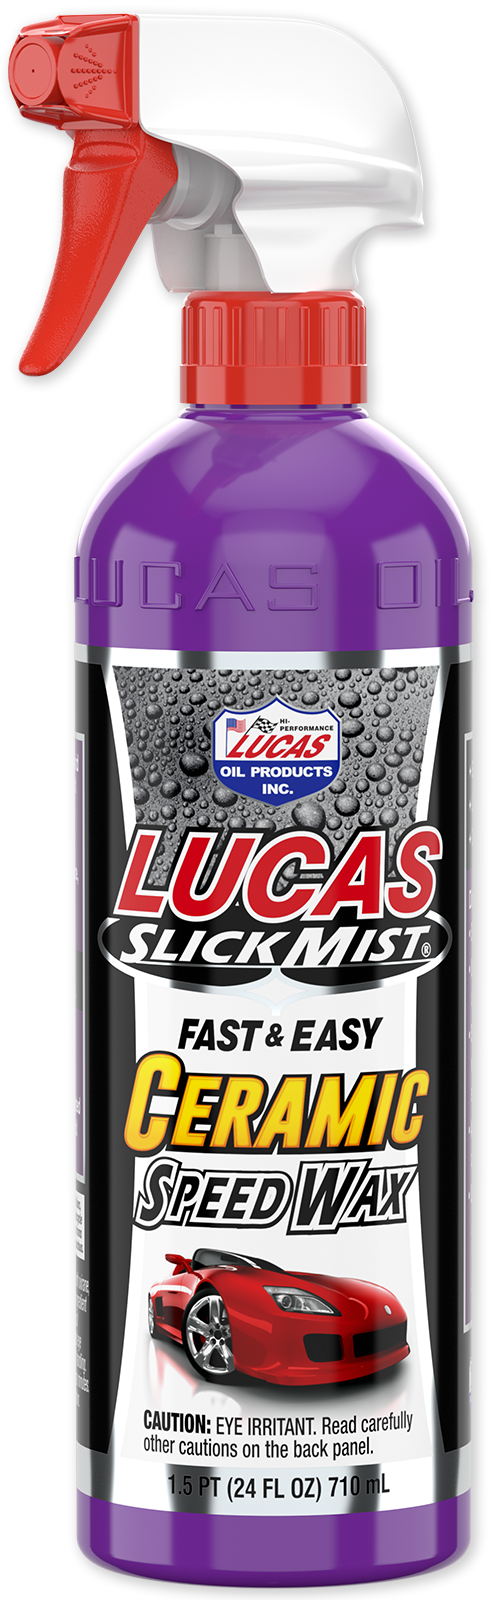 Lucas Slick Mist Speed Wax, Fast & Easy - 1.5 pt